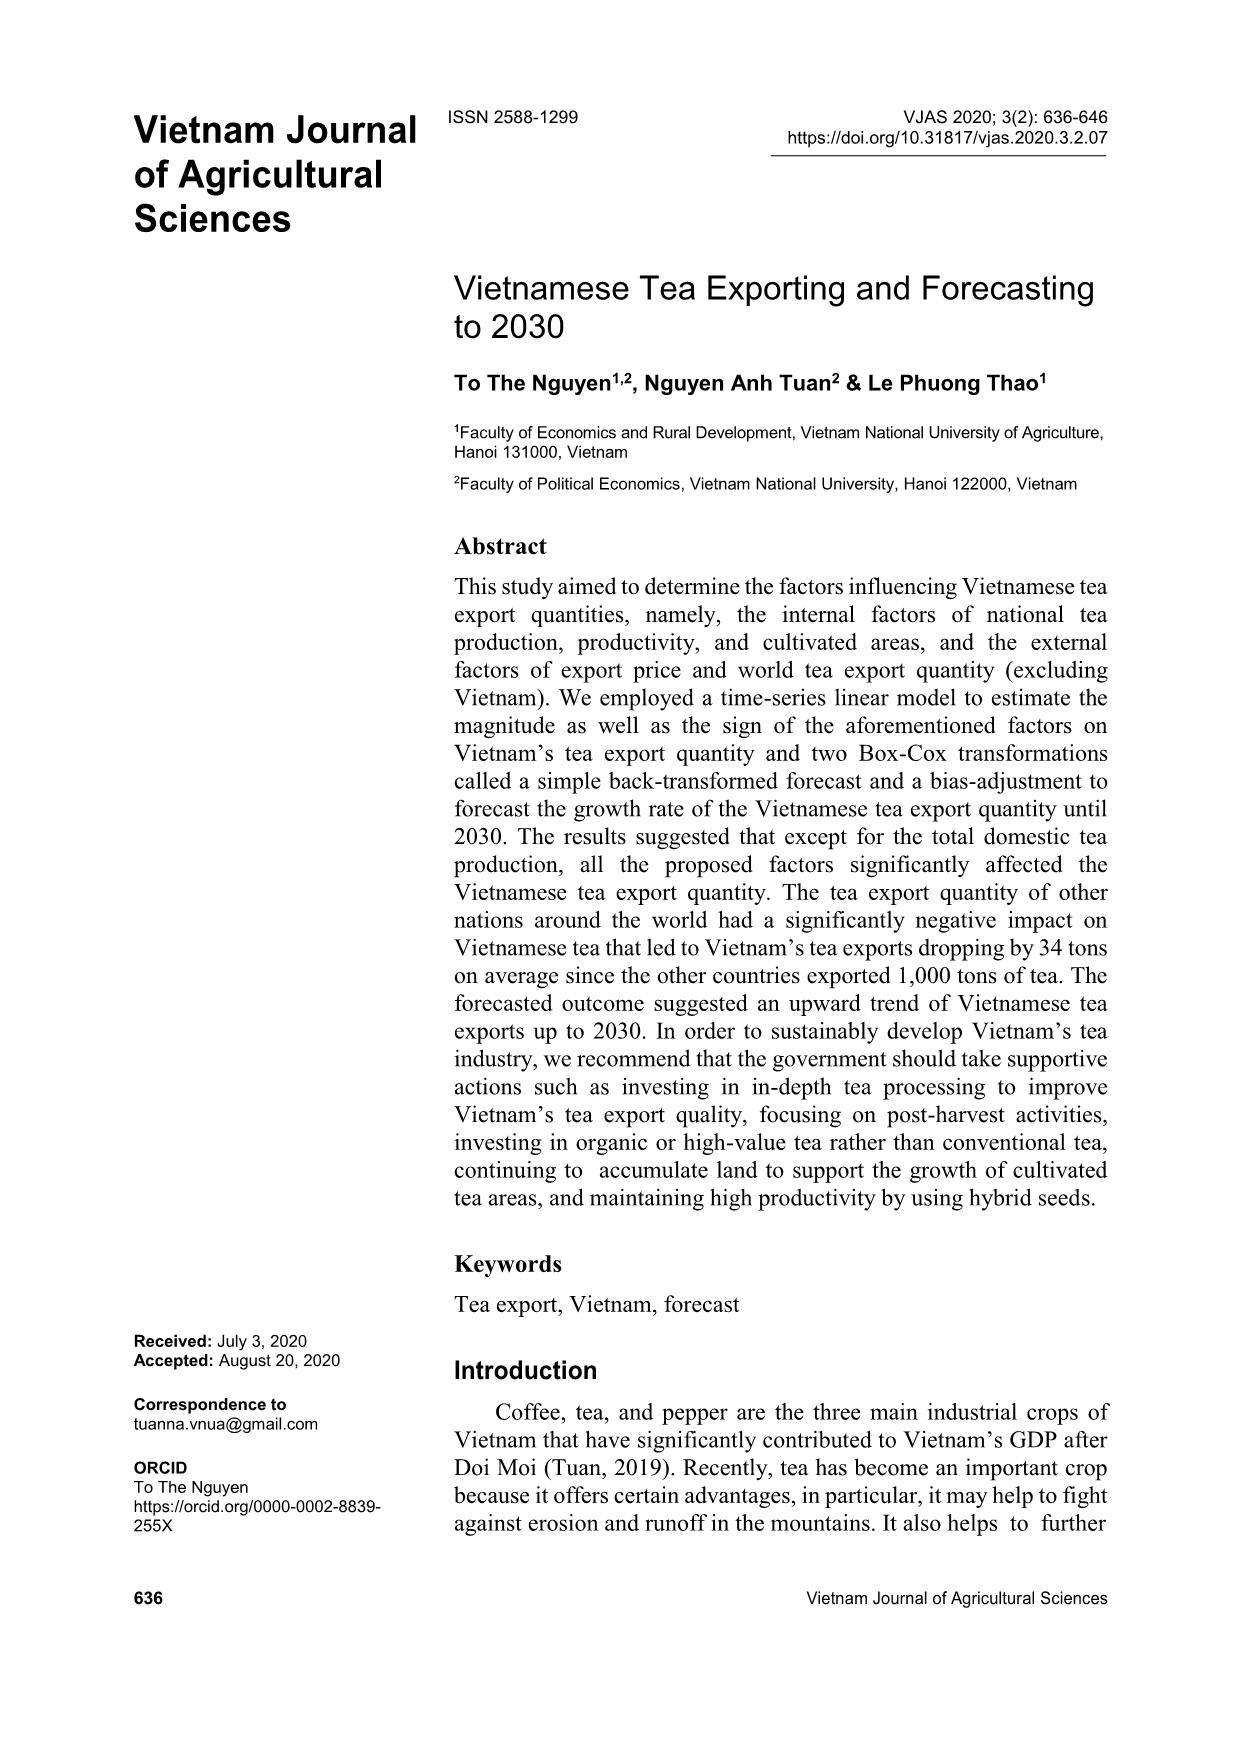 Vietnamese tea exporting and forecasting to 2030 trang 1